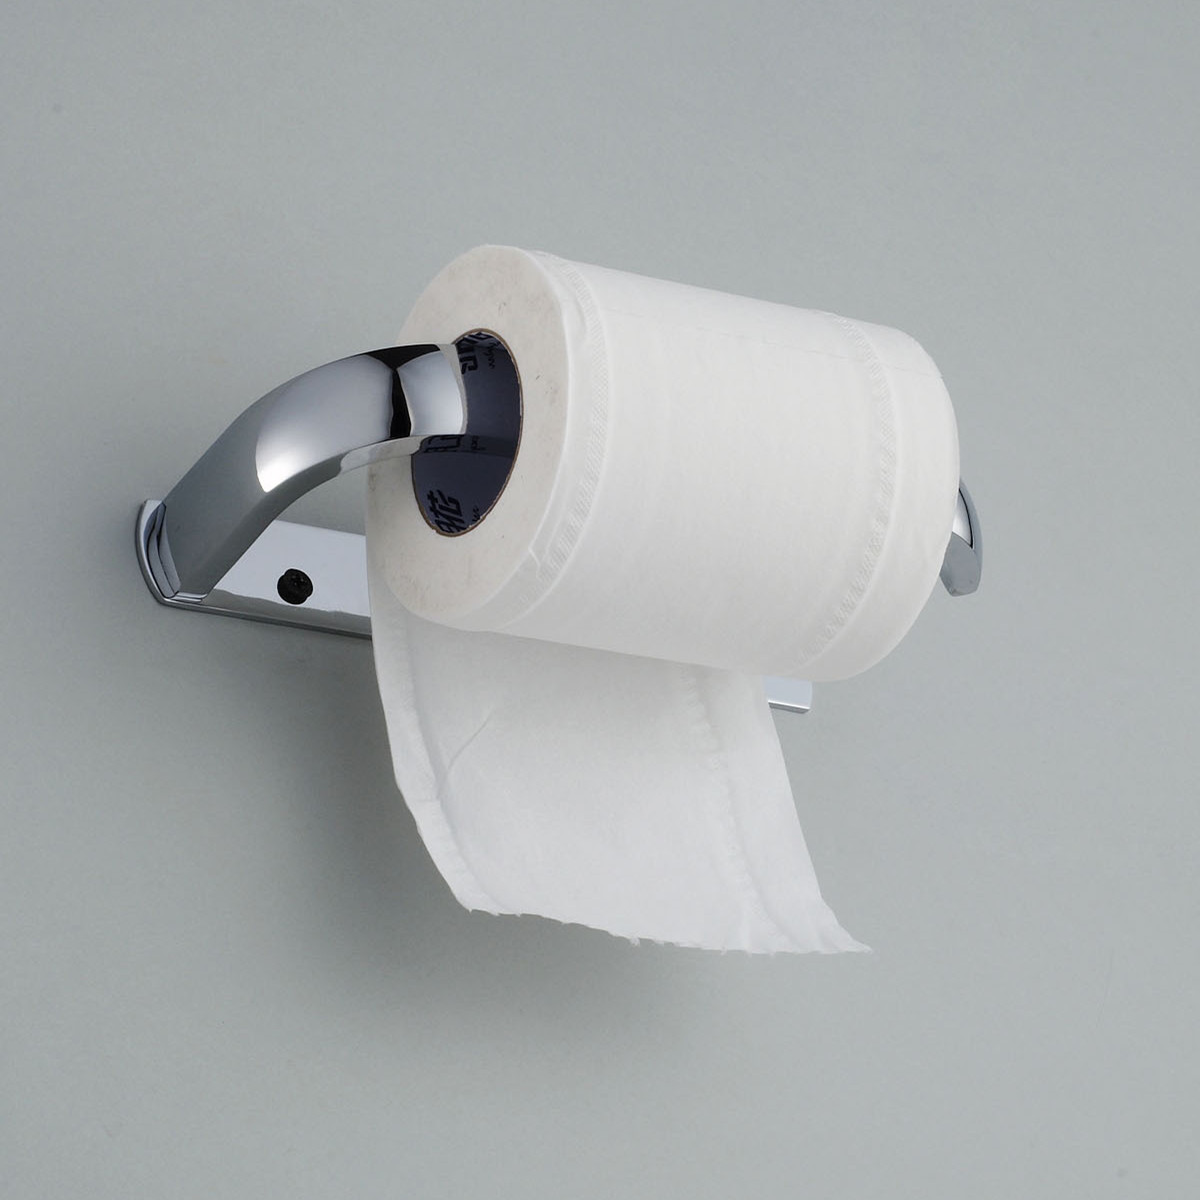 Stainless-Steel-Bathroom-Paper-Shelf-Holder-Tissue-Roll-Rack-Stand-Brecket-Wall-Mount-1333052